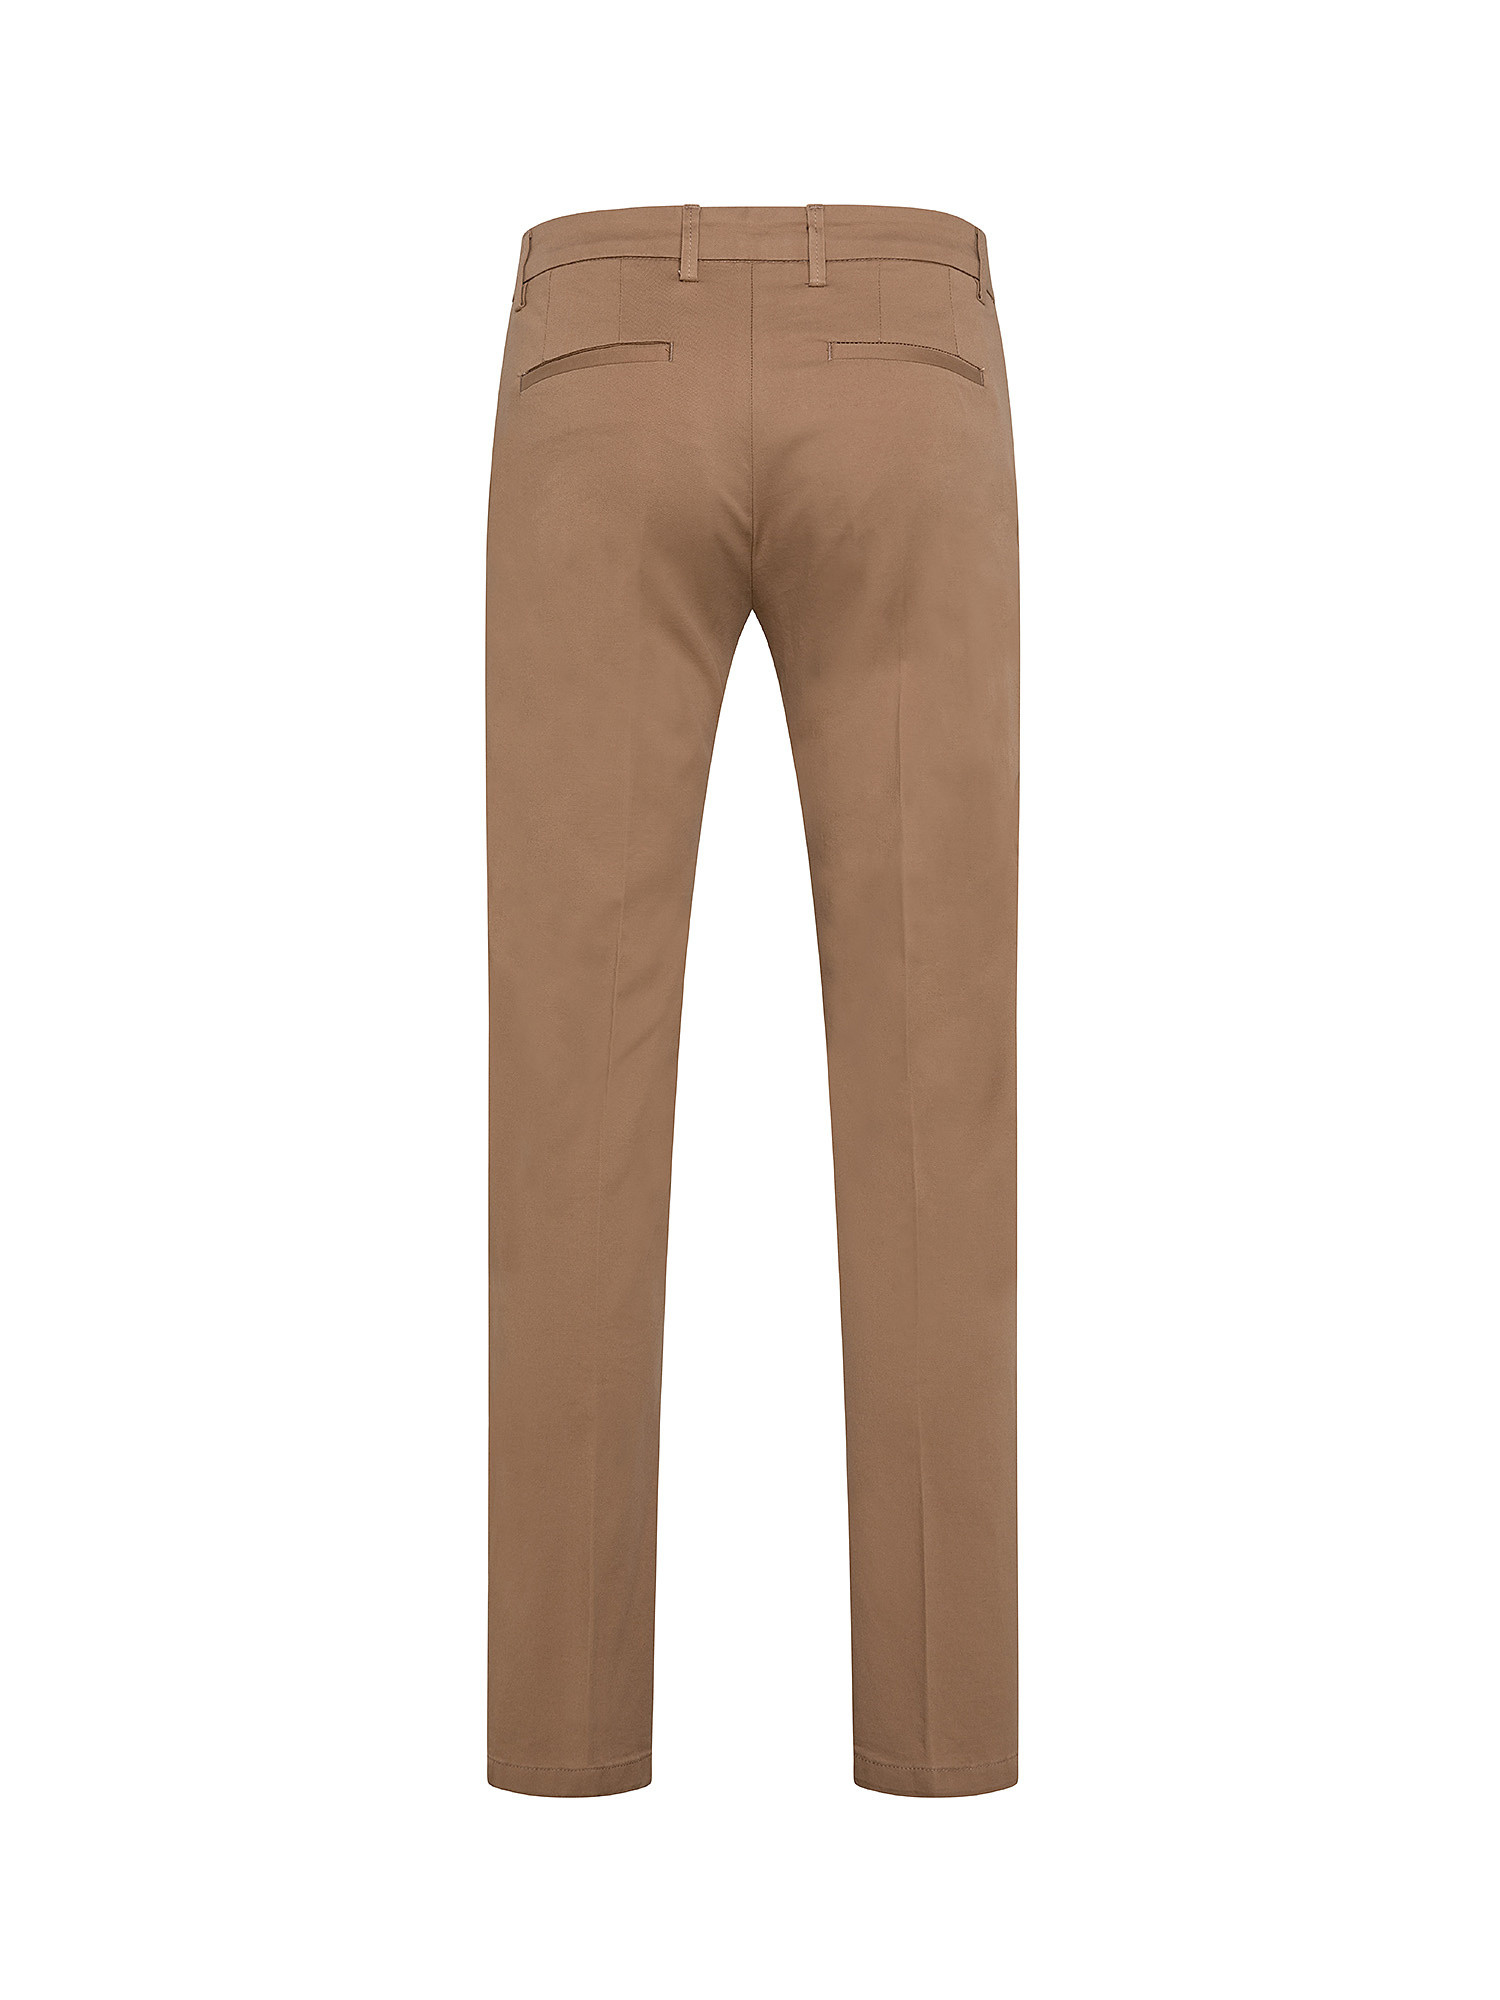 Pantalone chino, Marrone, large image number 1